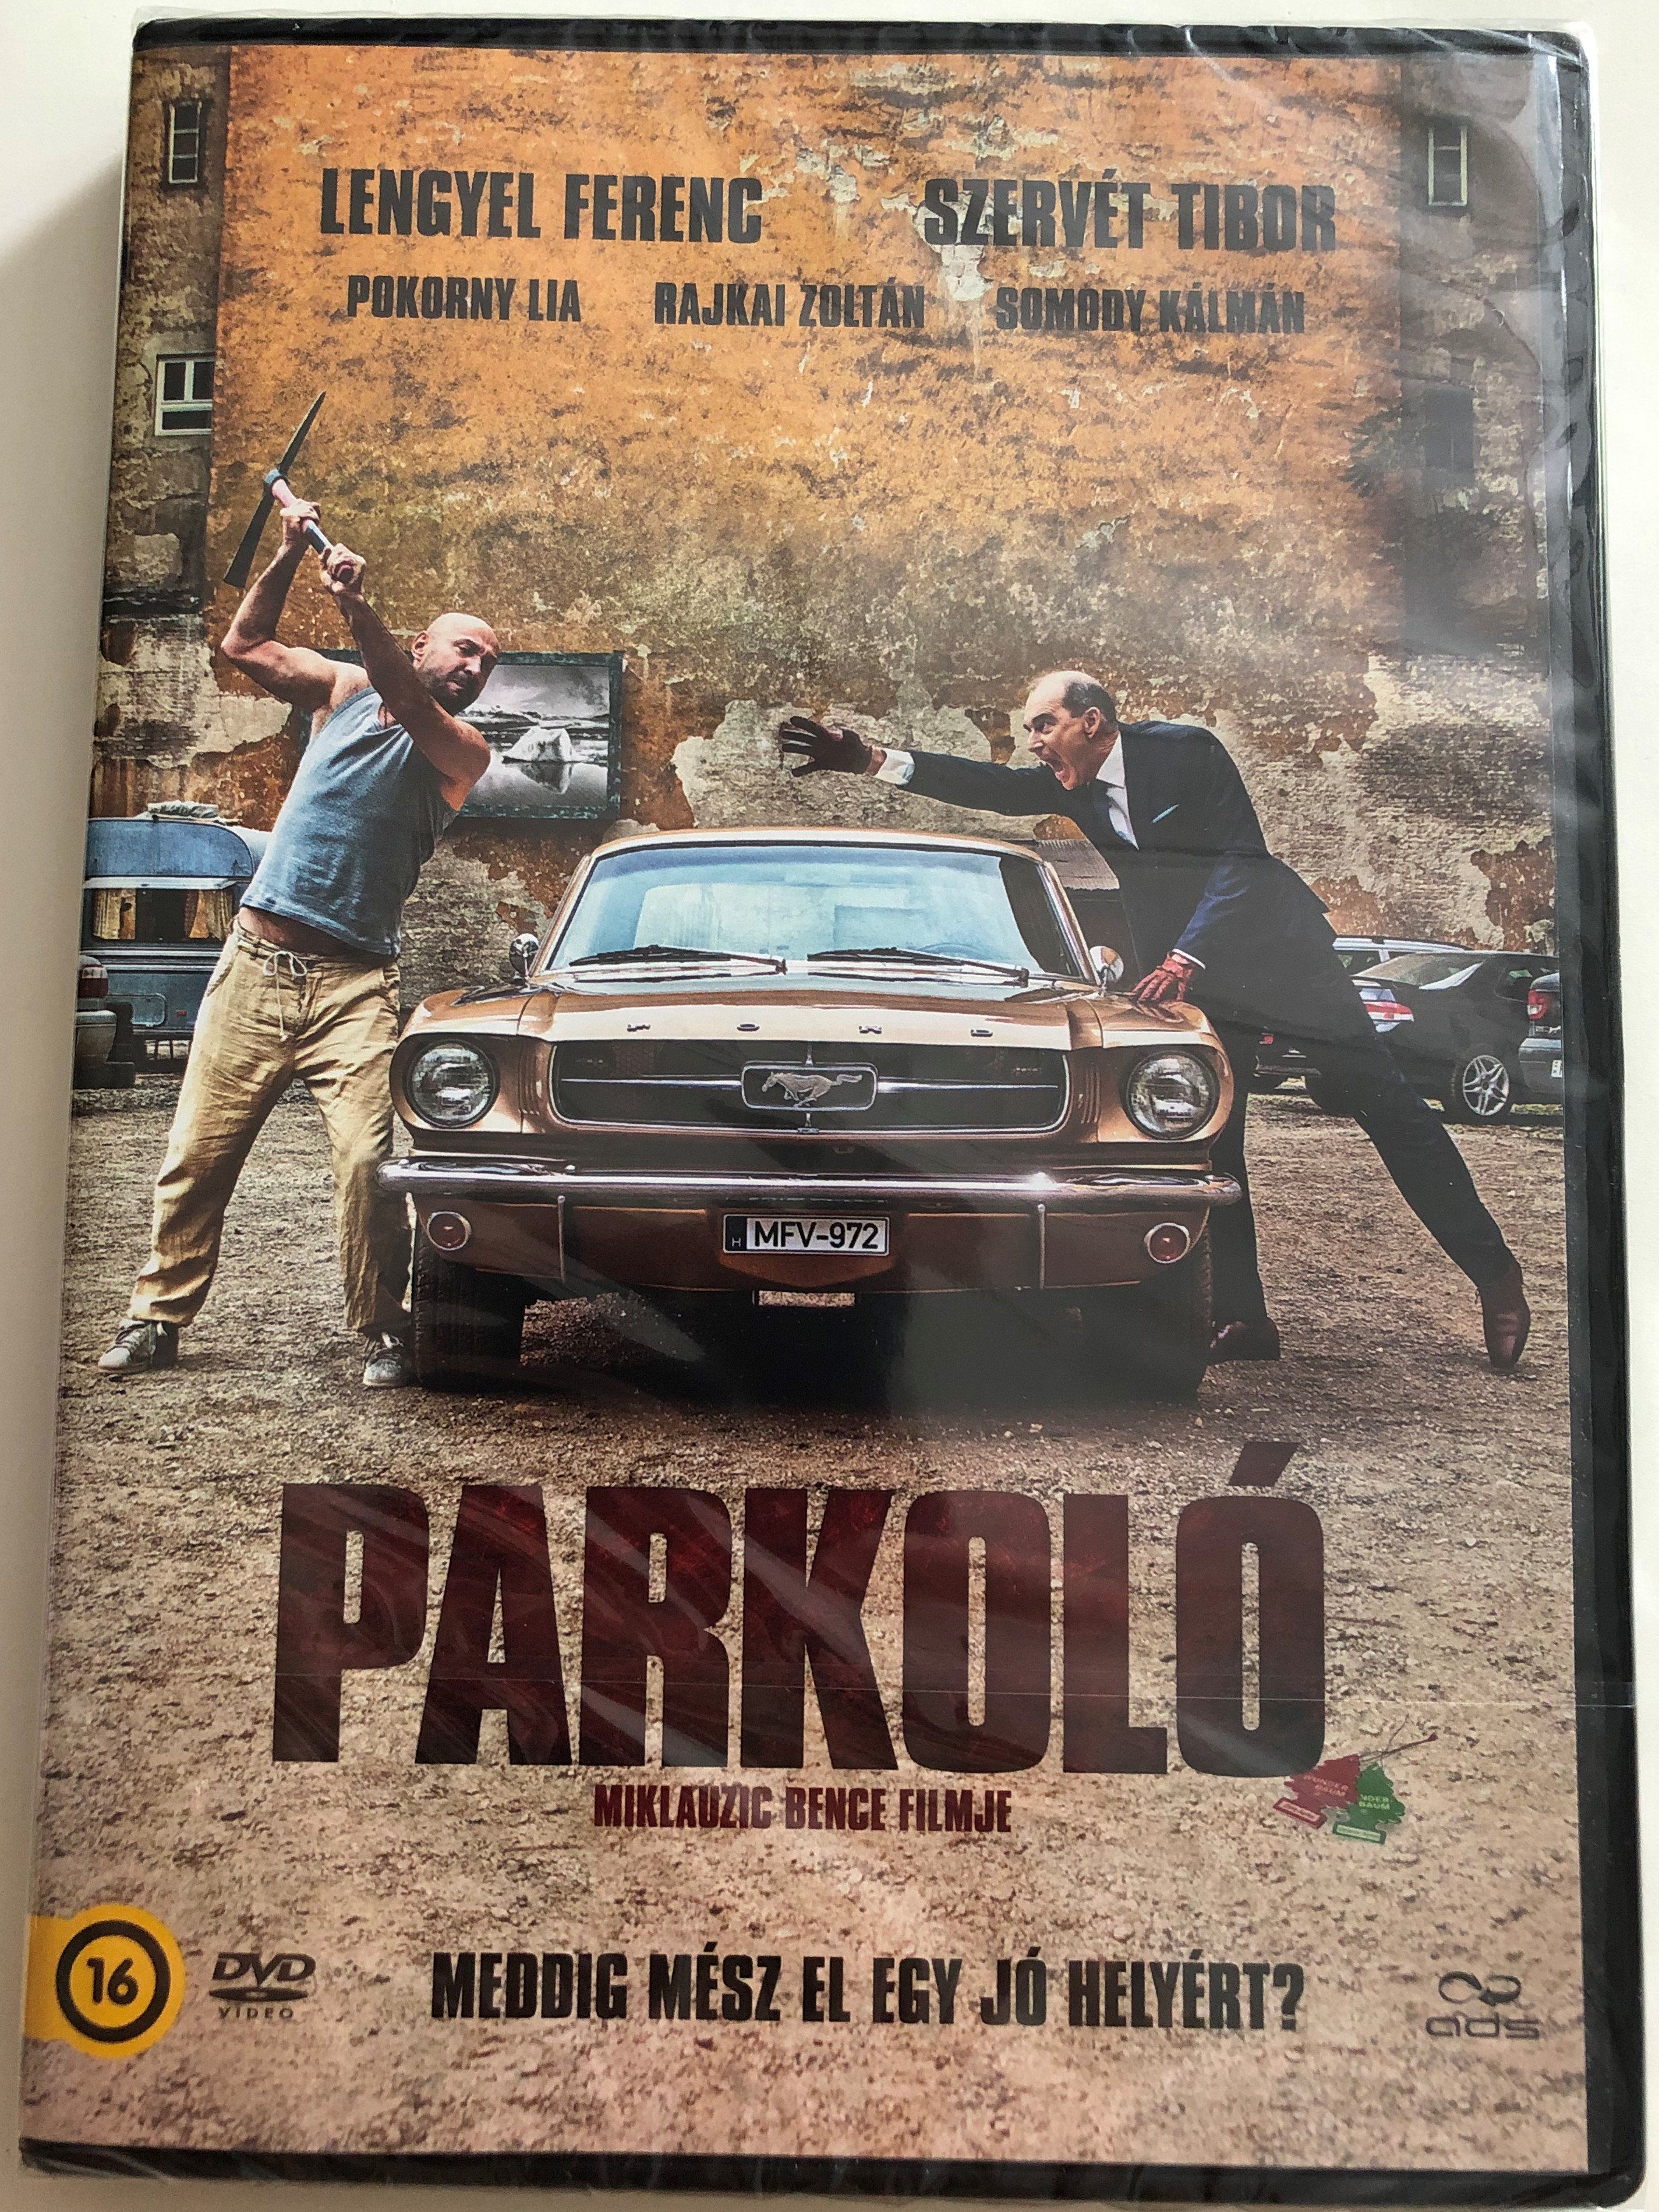 parkol-dvd-2014-car-park-directed-by-miklauzic-bence-starring-lengyel-ferenc-szerv-t-tibor-somody-k-lm-n-pokorny-lia-1-.jpg